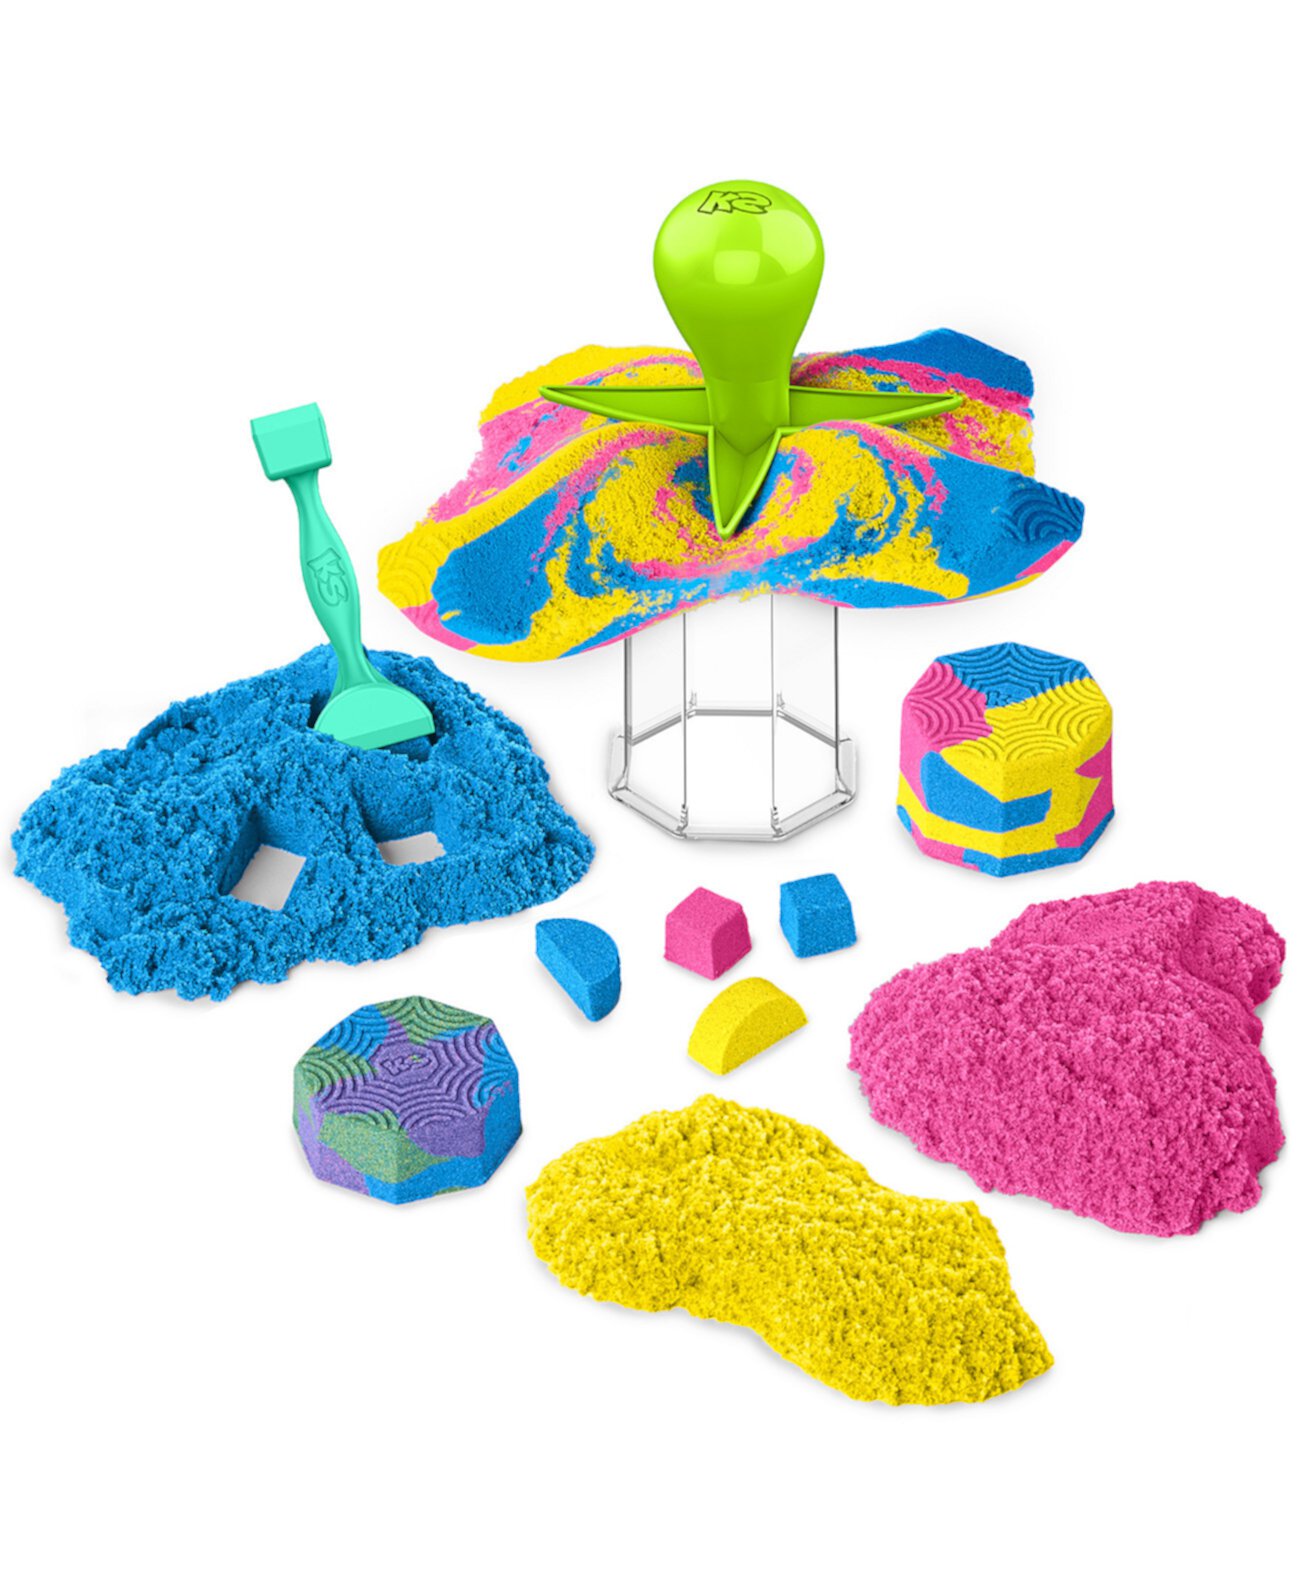 Squish N Create с синим, желтым и розовым игровым песком Kinetic